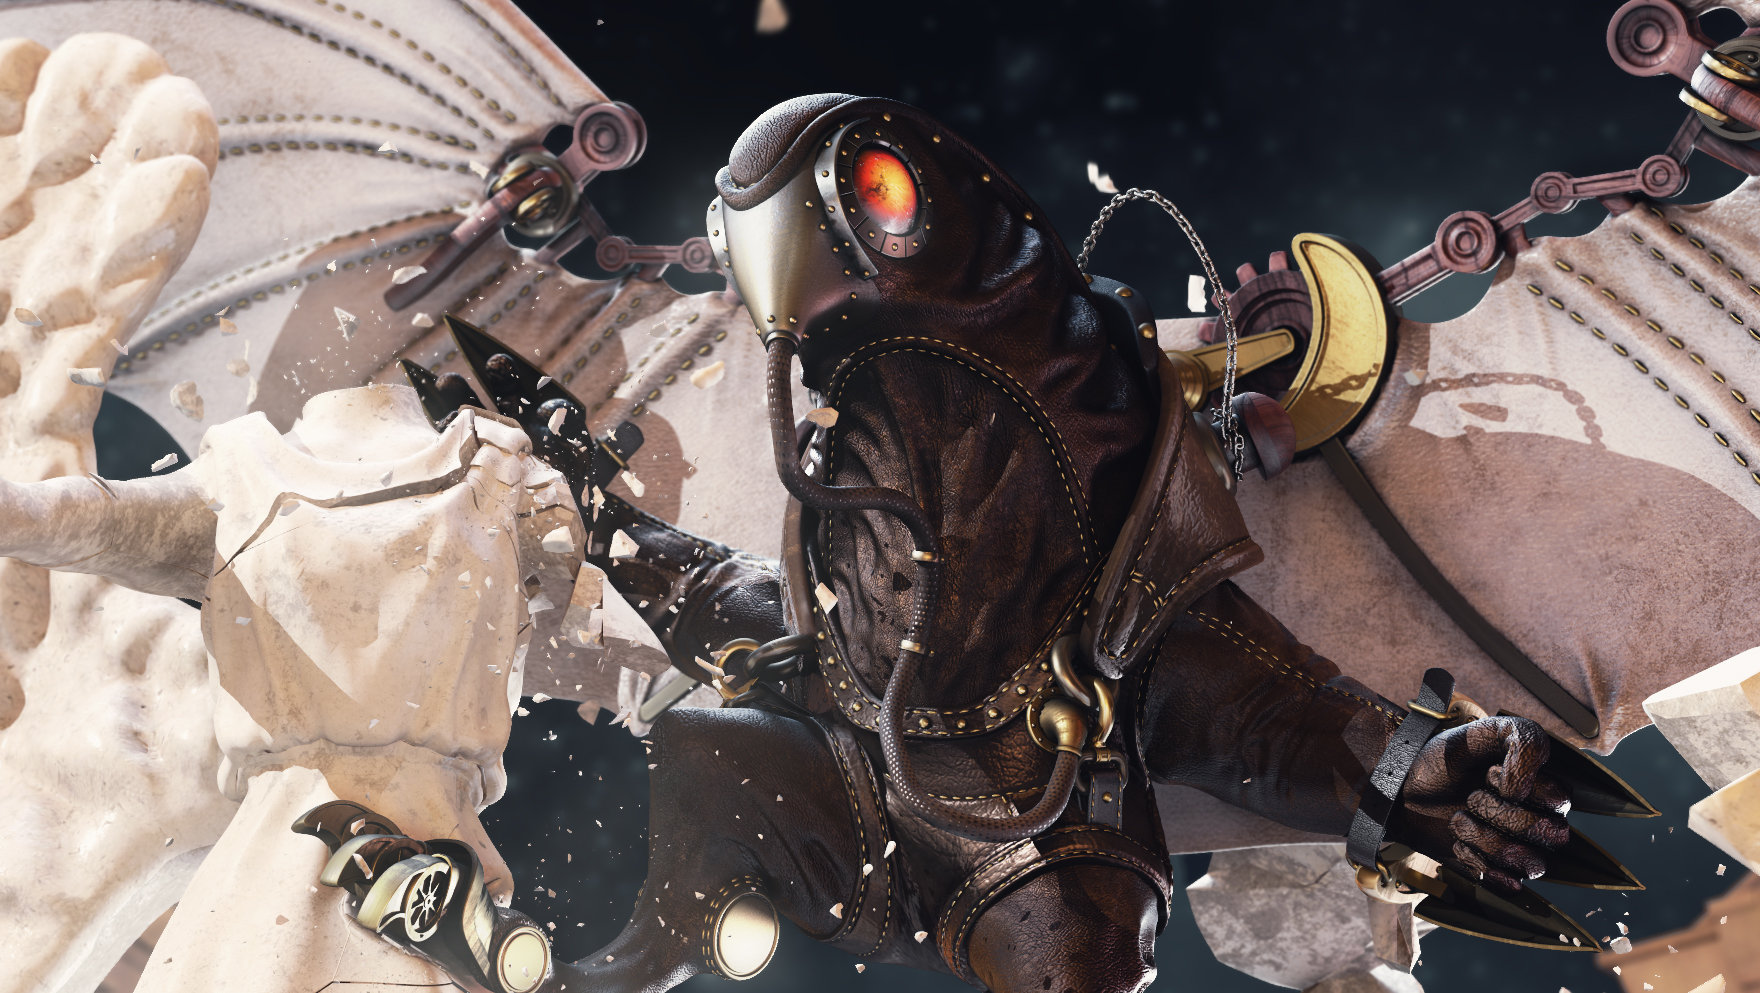 BioShock Infinite PS4: Songbird Billboard by roundularman on DeviantArt